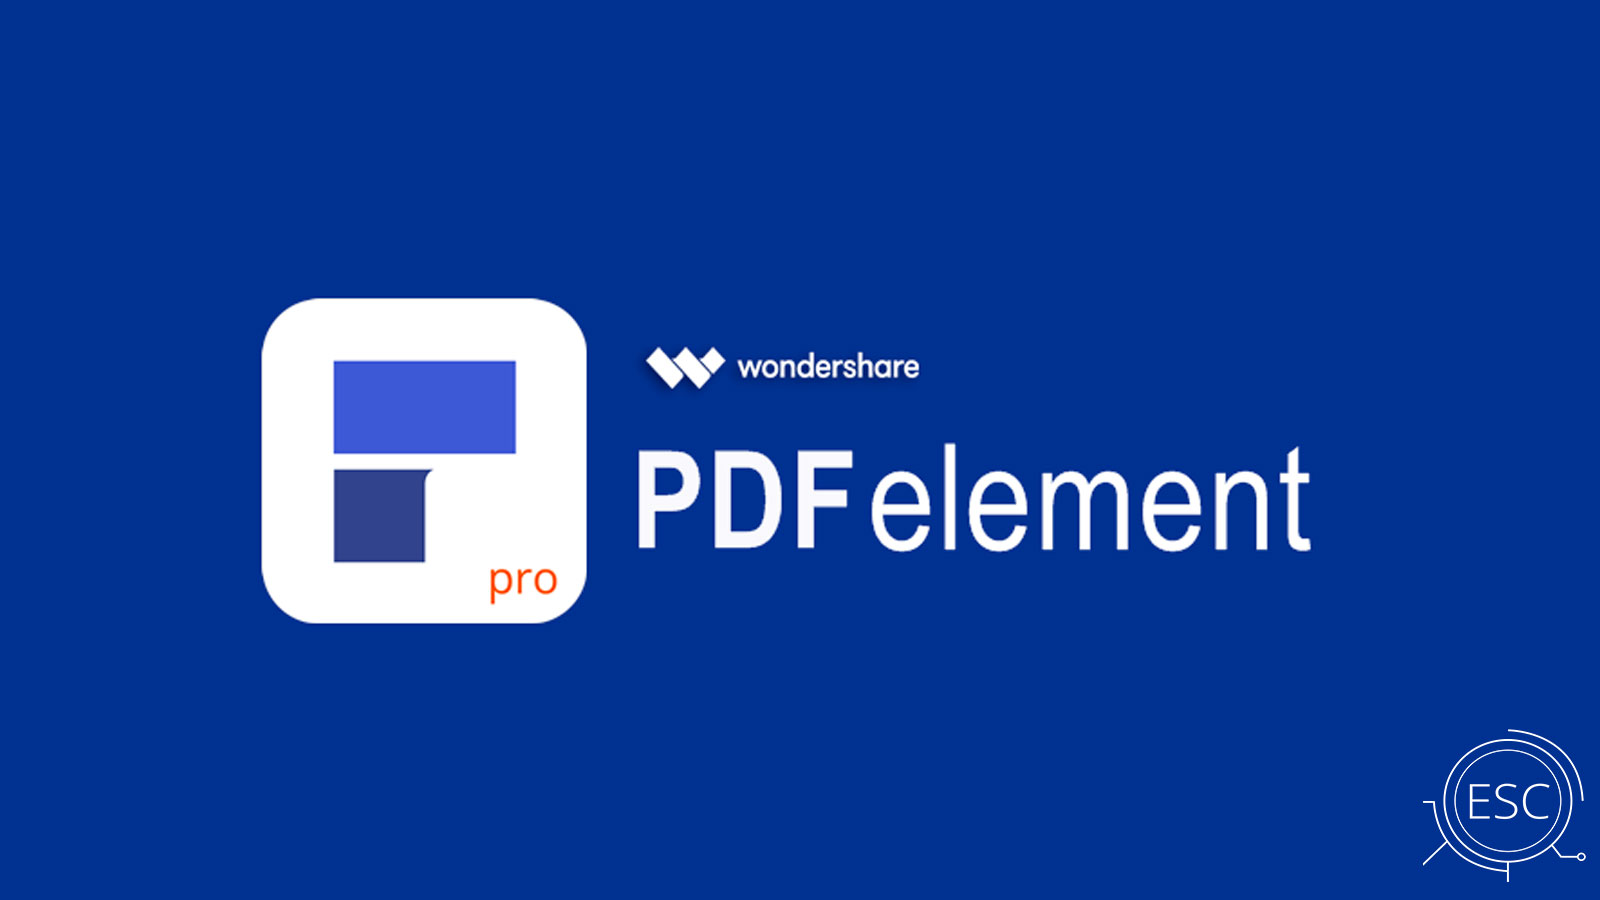 wondershare pdfelement 8 pro download